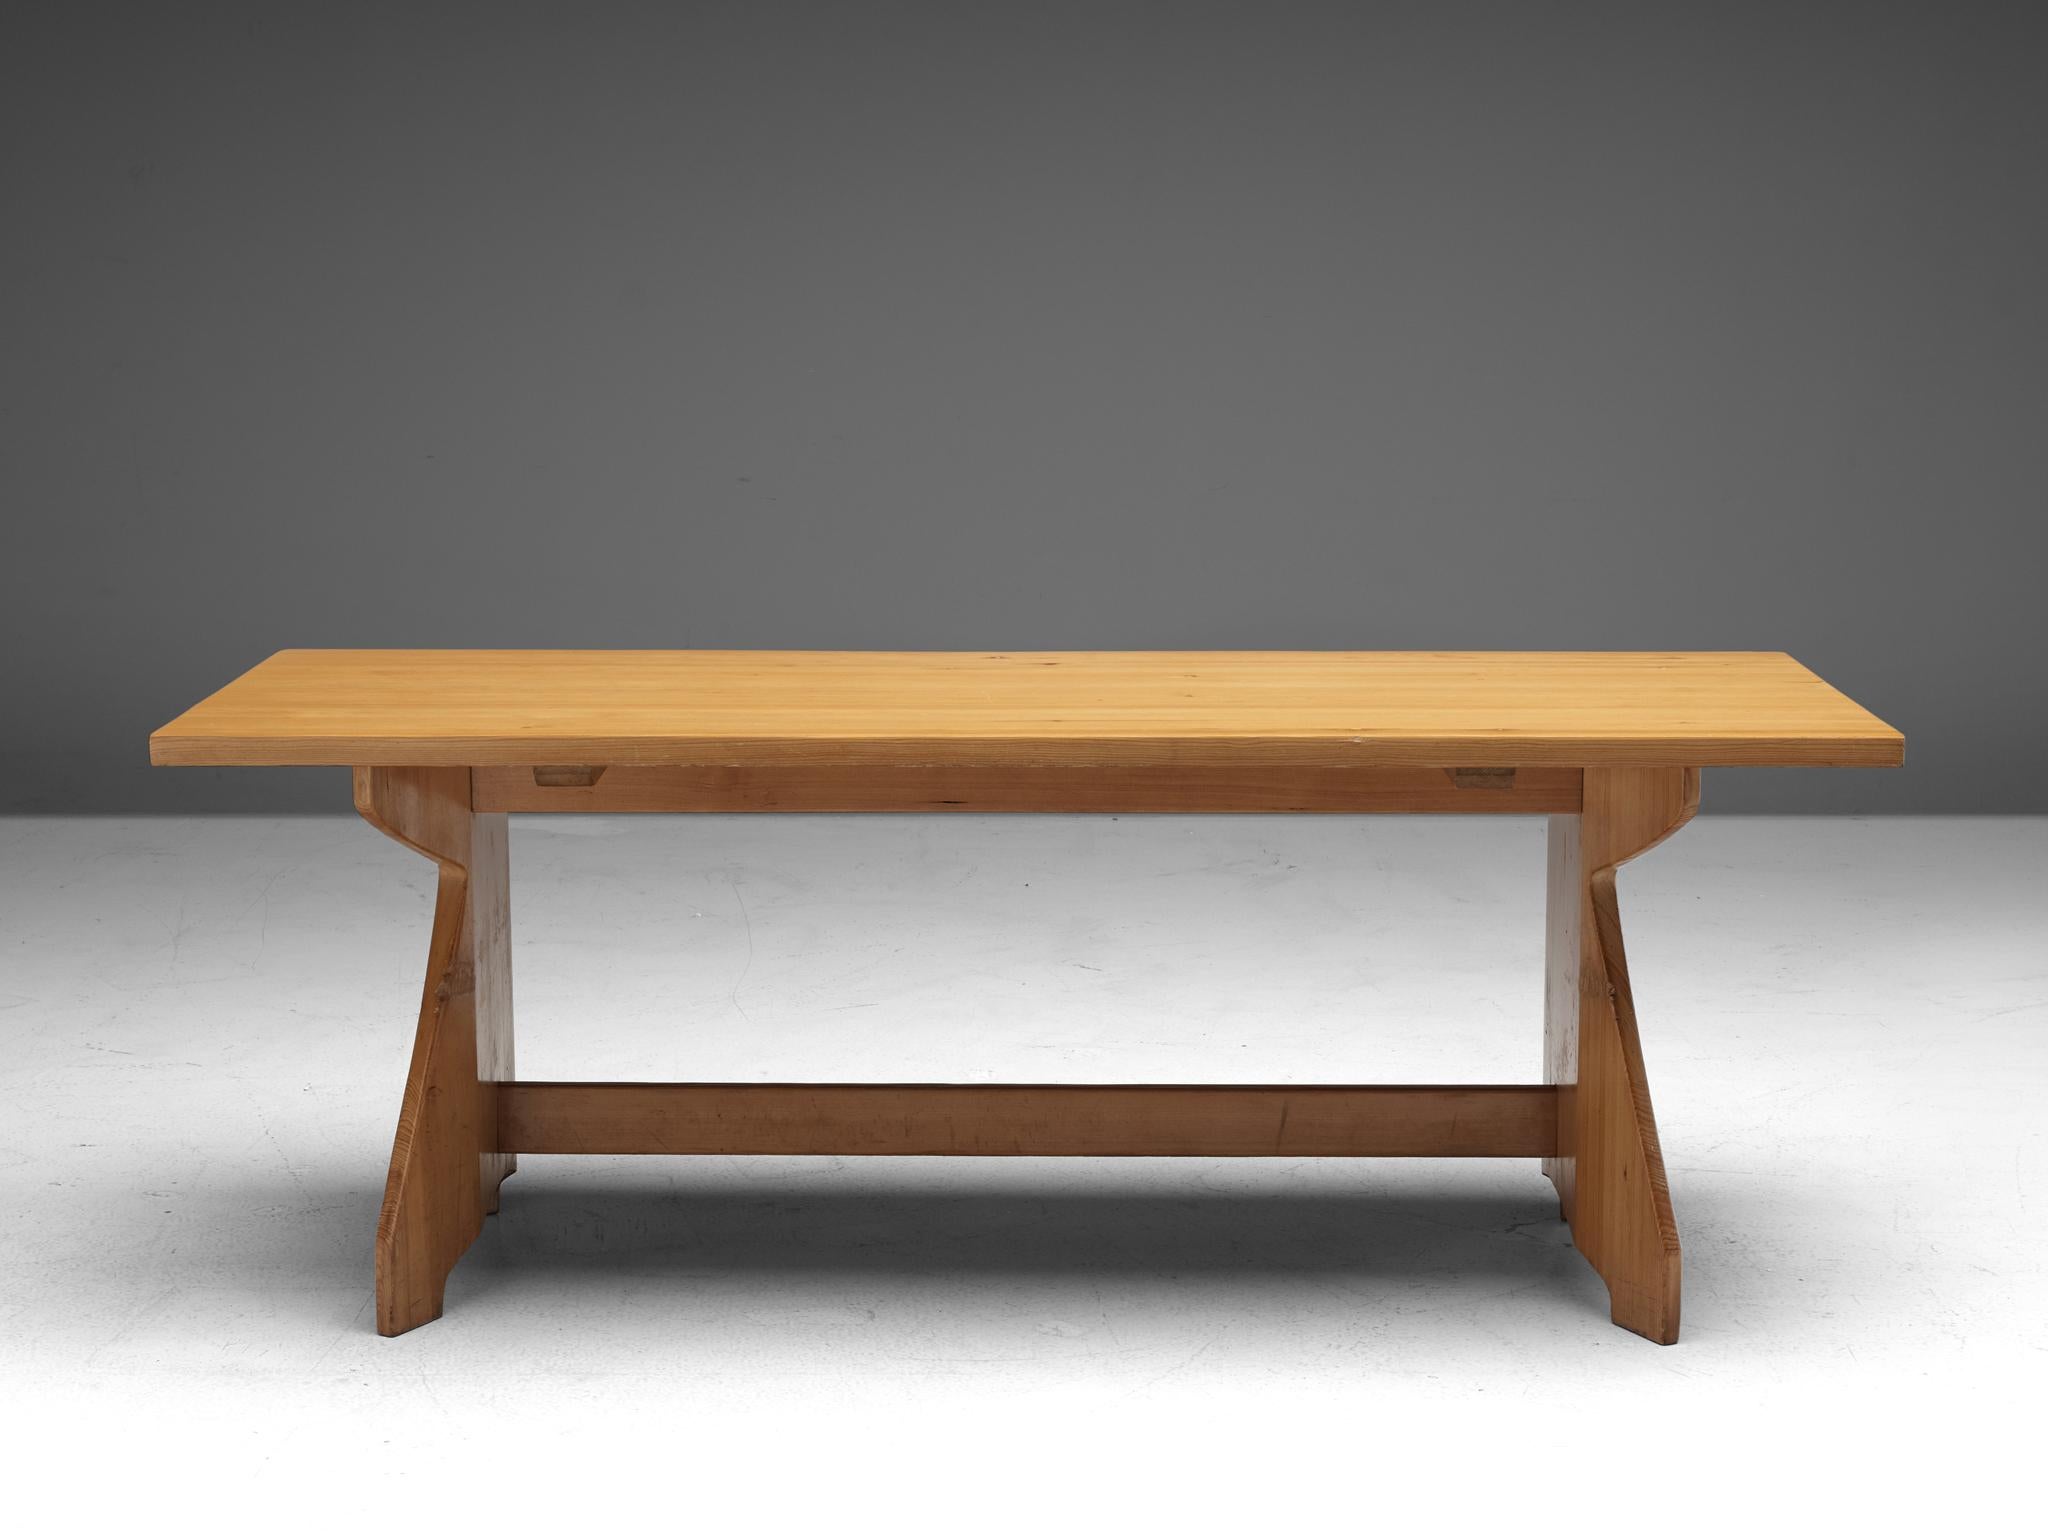 Danish Jacob Kielland-Brandt Dining Table in Solid Pine